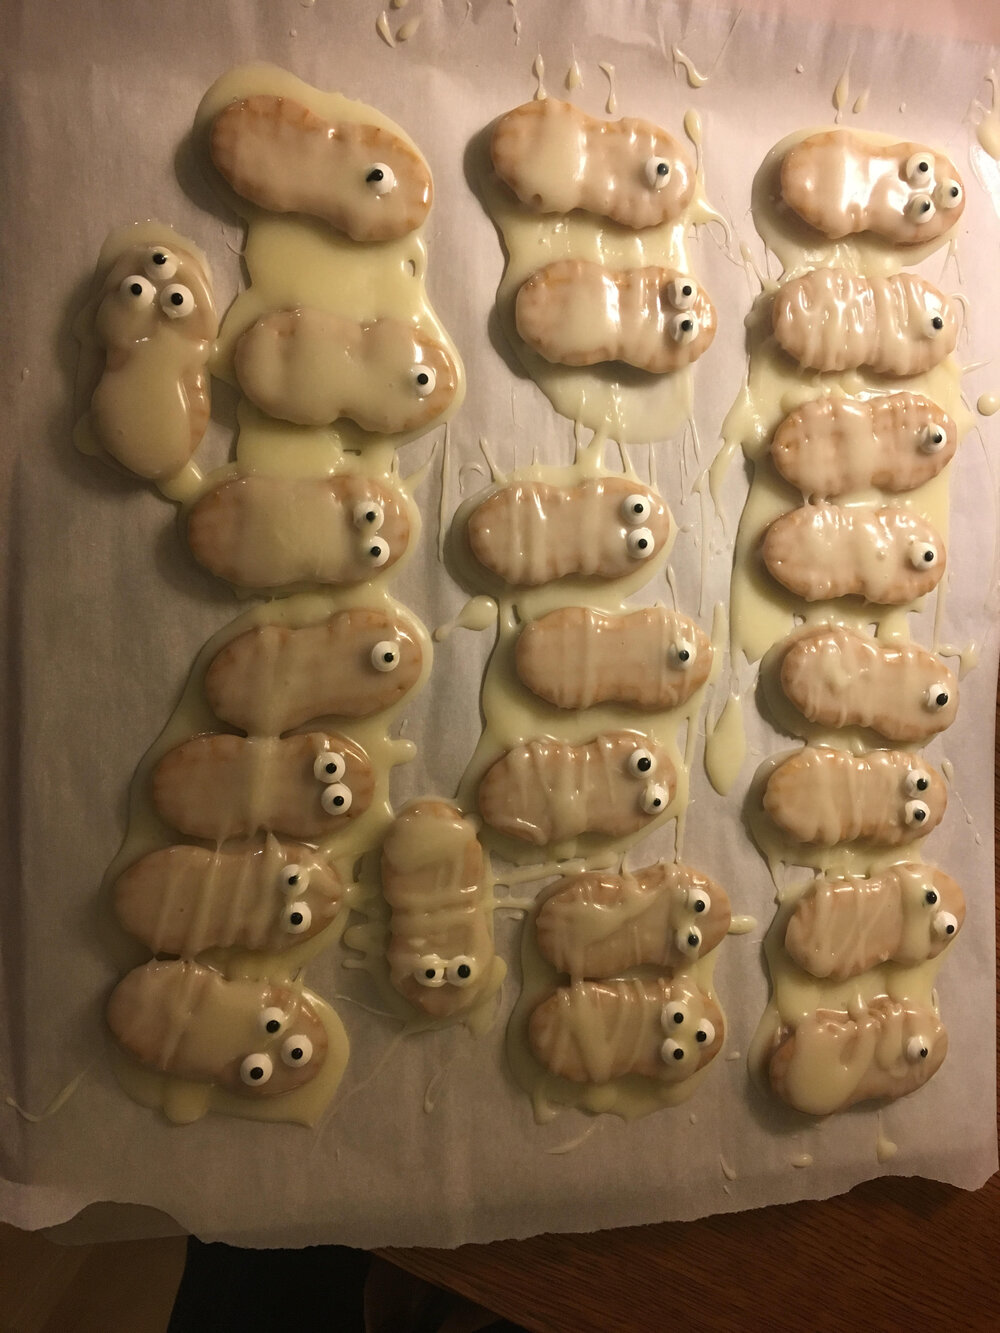 Spooky cookies (aka Boo-cookies because they look like bukaki)